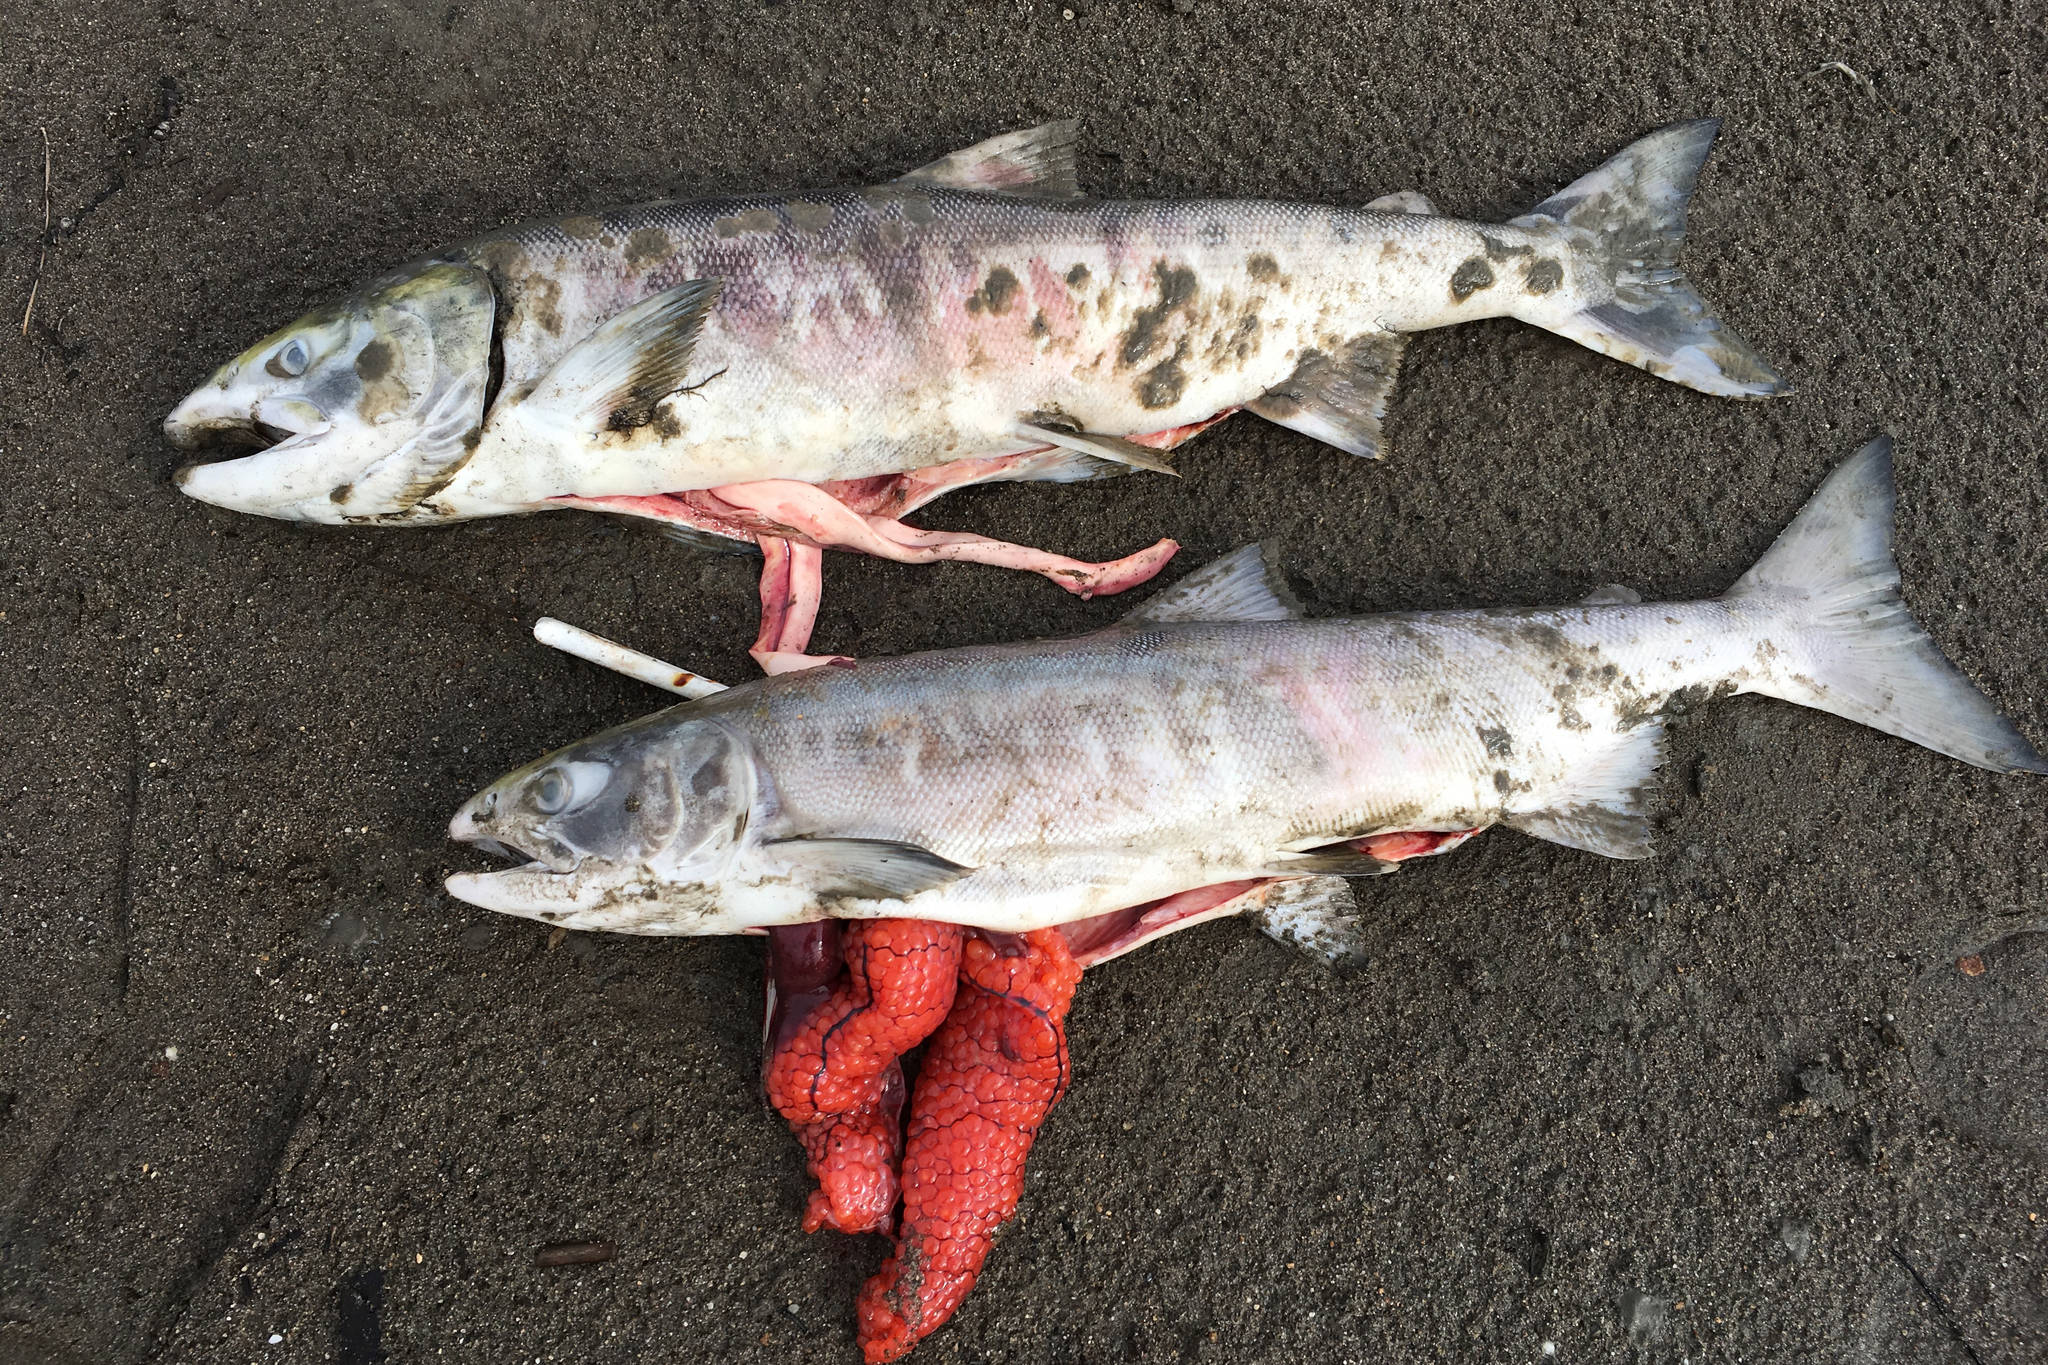 Warm waters across Alaska cause salmon die-offs